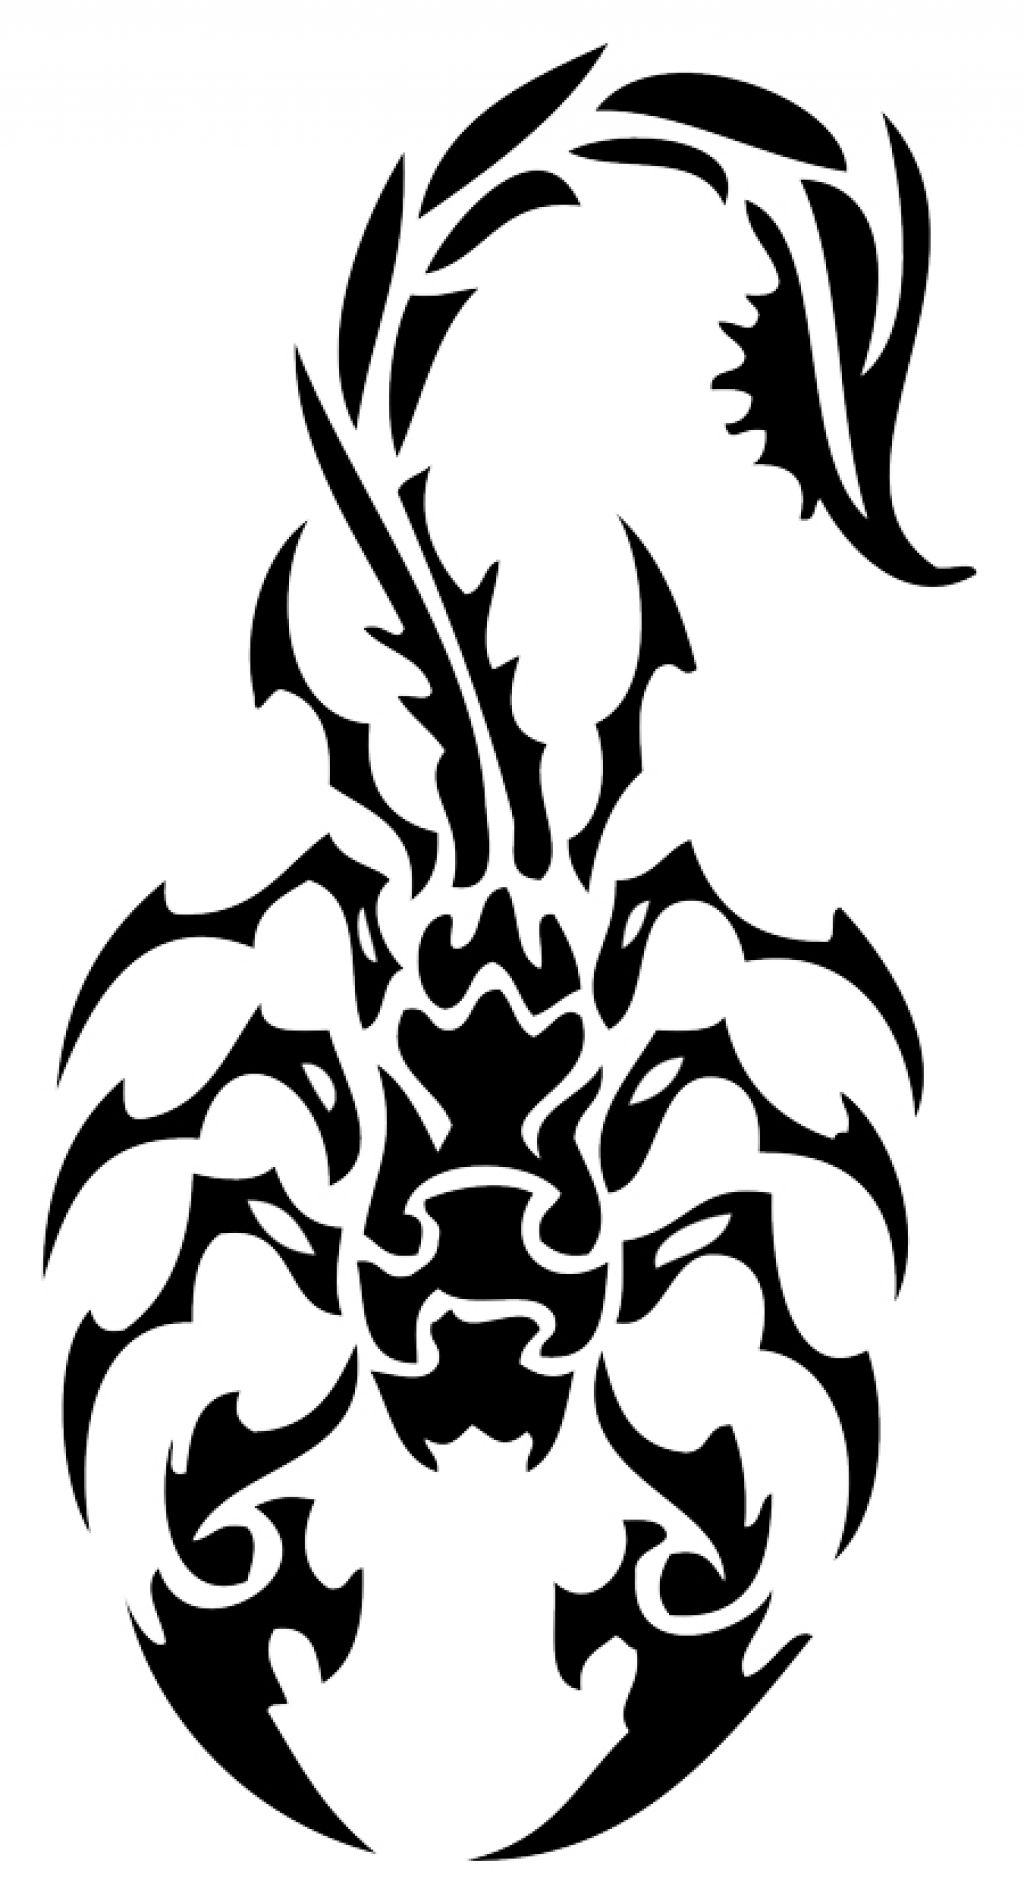 Scorpion Tattoo Drawing at GetDrawings | Free download